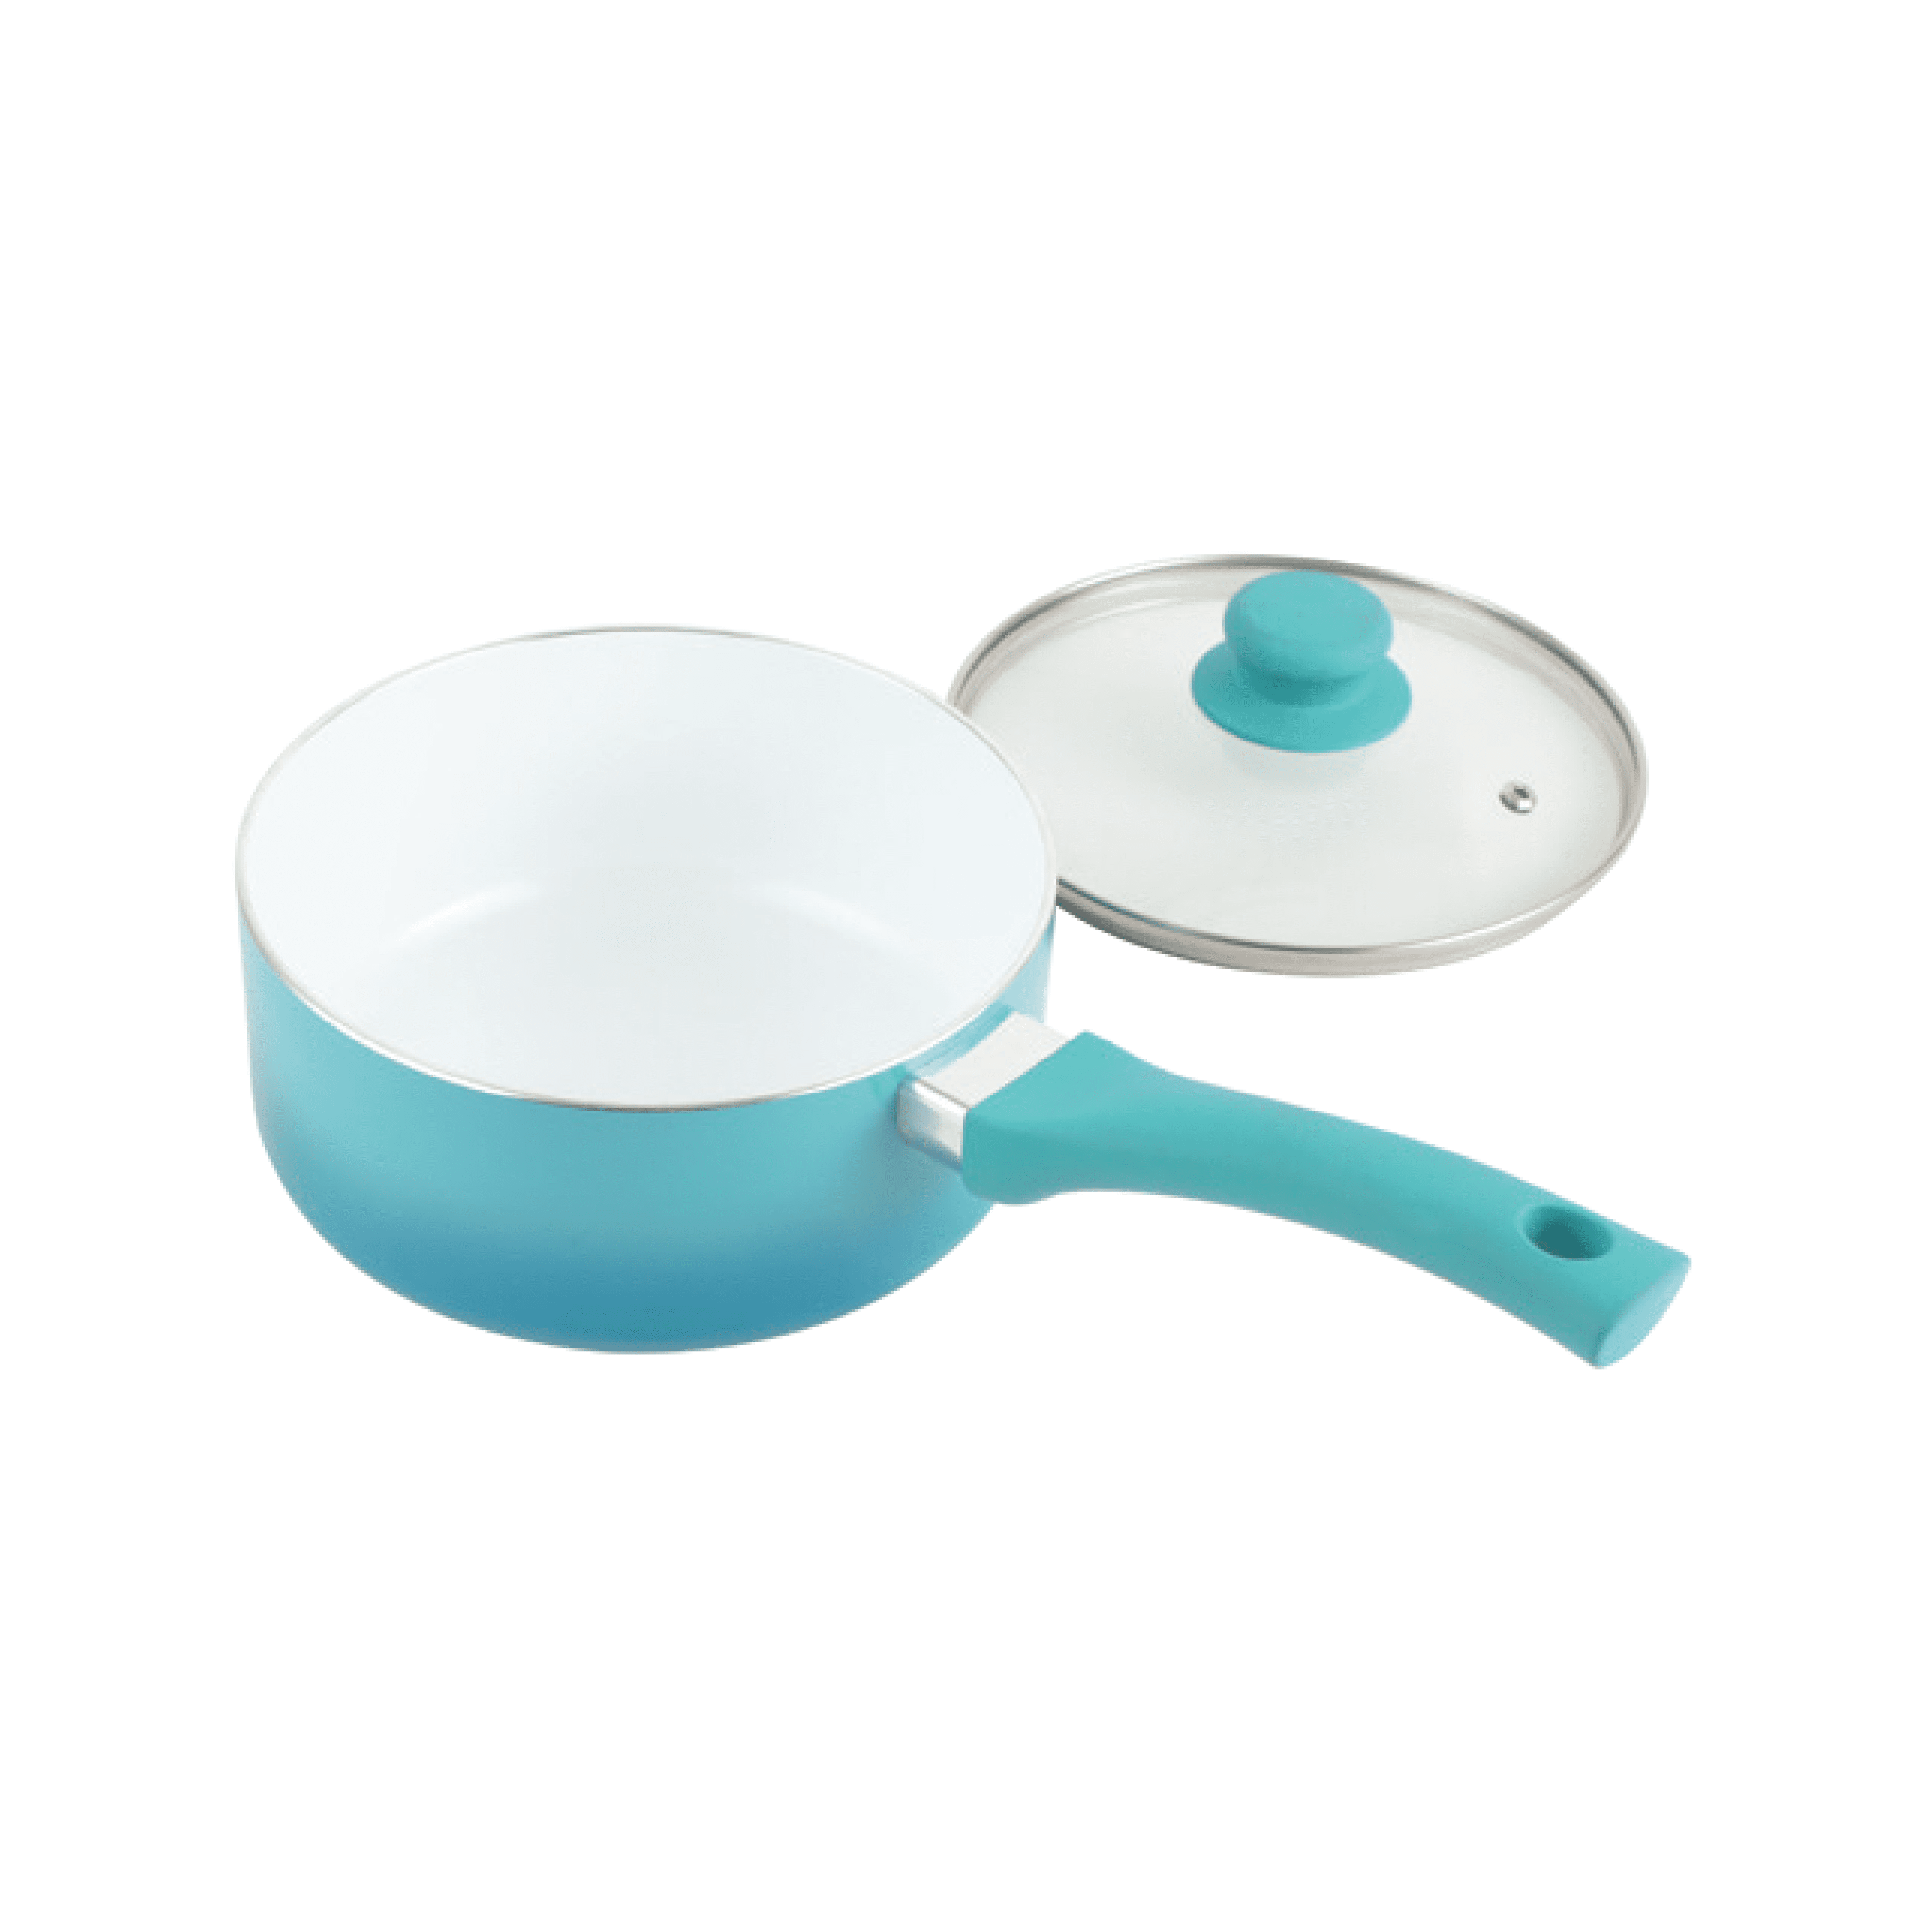 Mainstays Ceramic Nonstick 12 Piece Cookware Set, Blue Linen, Hand wash  Only 